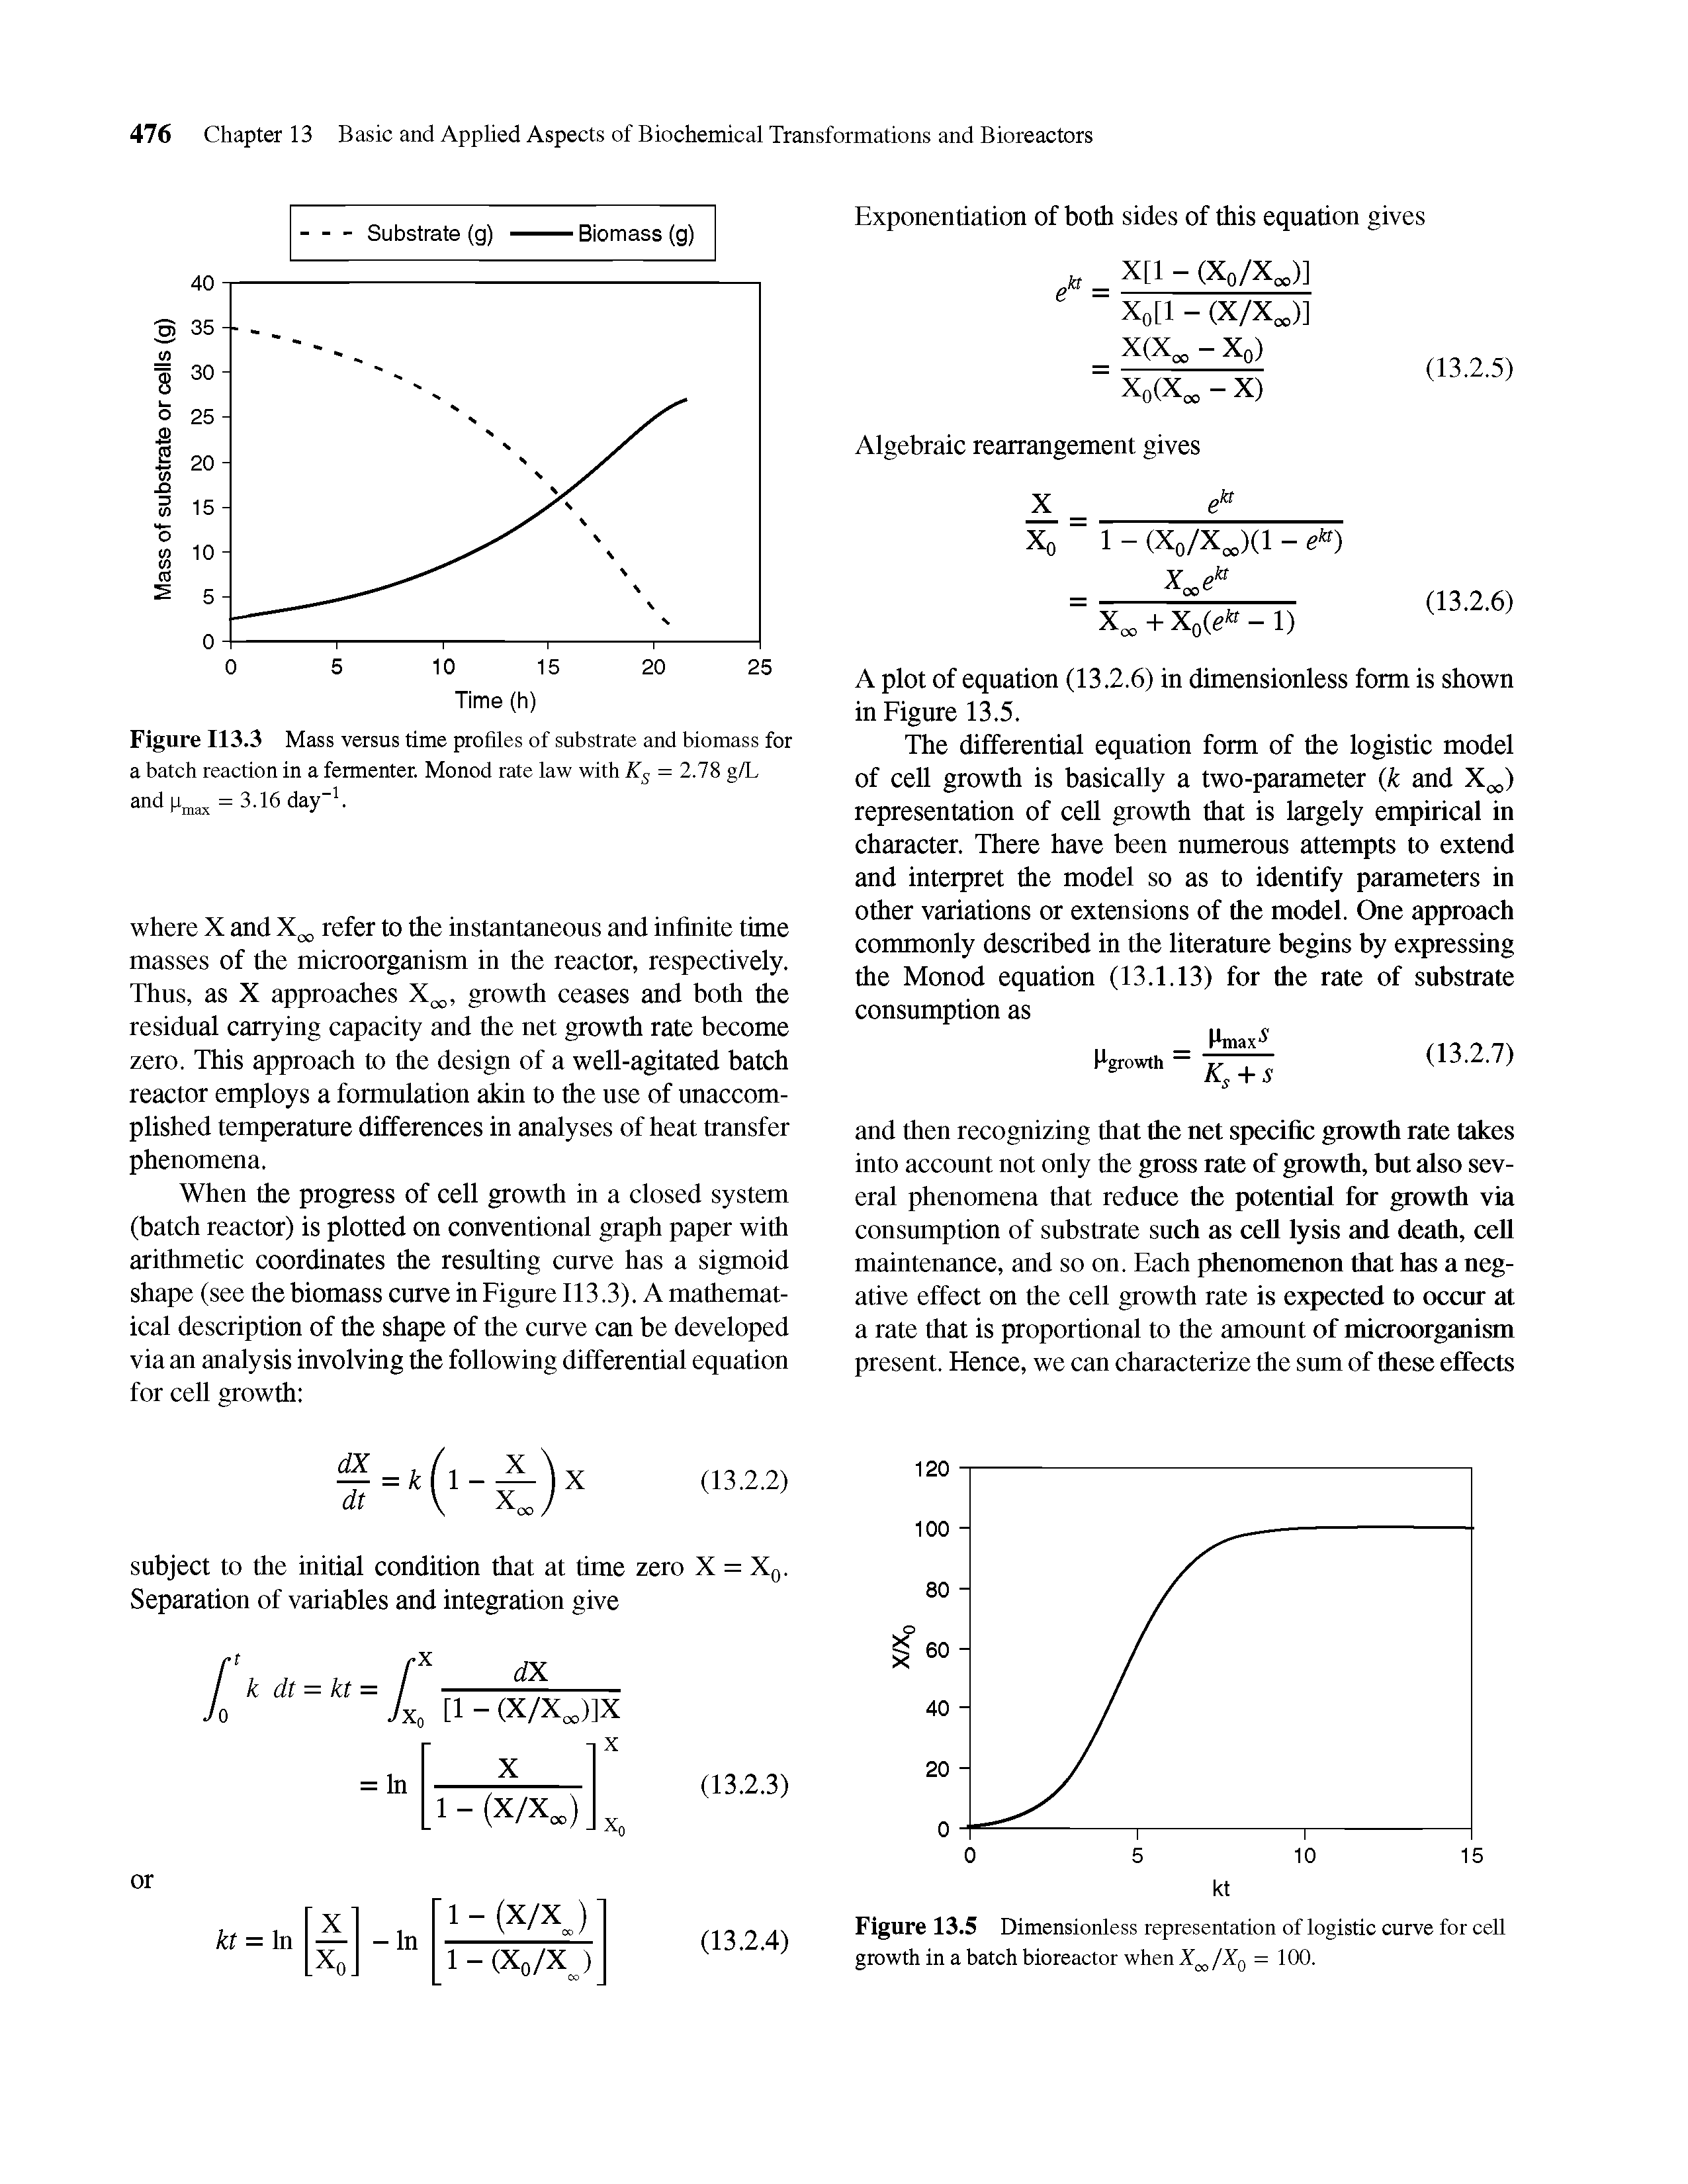 Figure 13.5 Dimensionless representation of logistic curve for ceU growth in a batch bioreactor when X /Xq = 100.